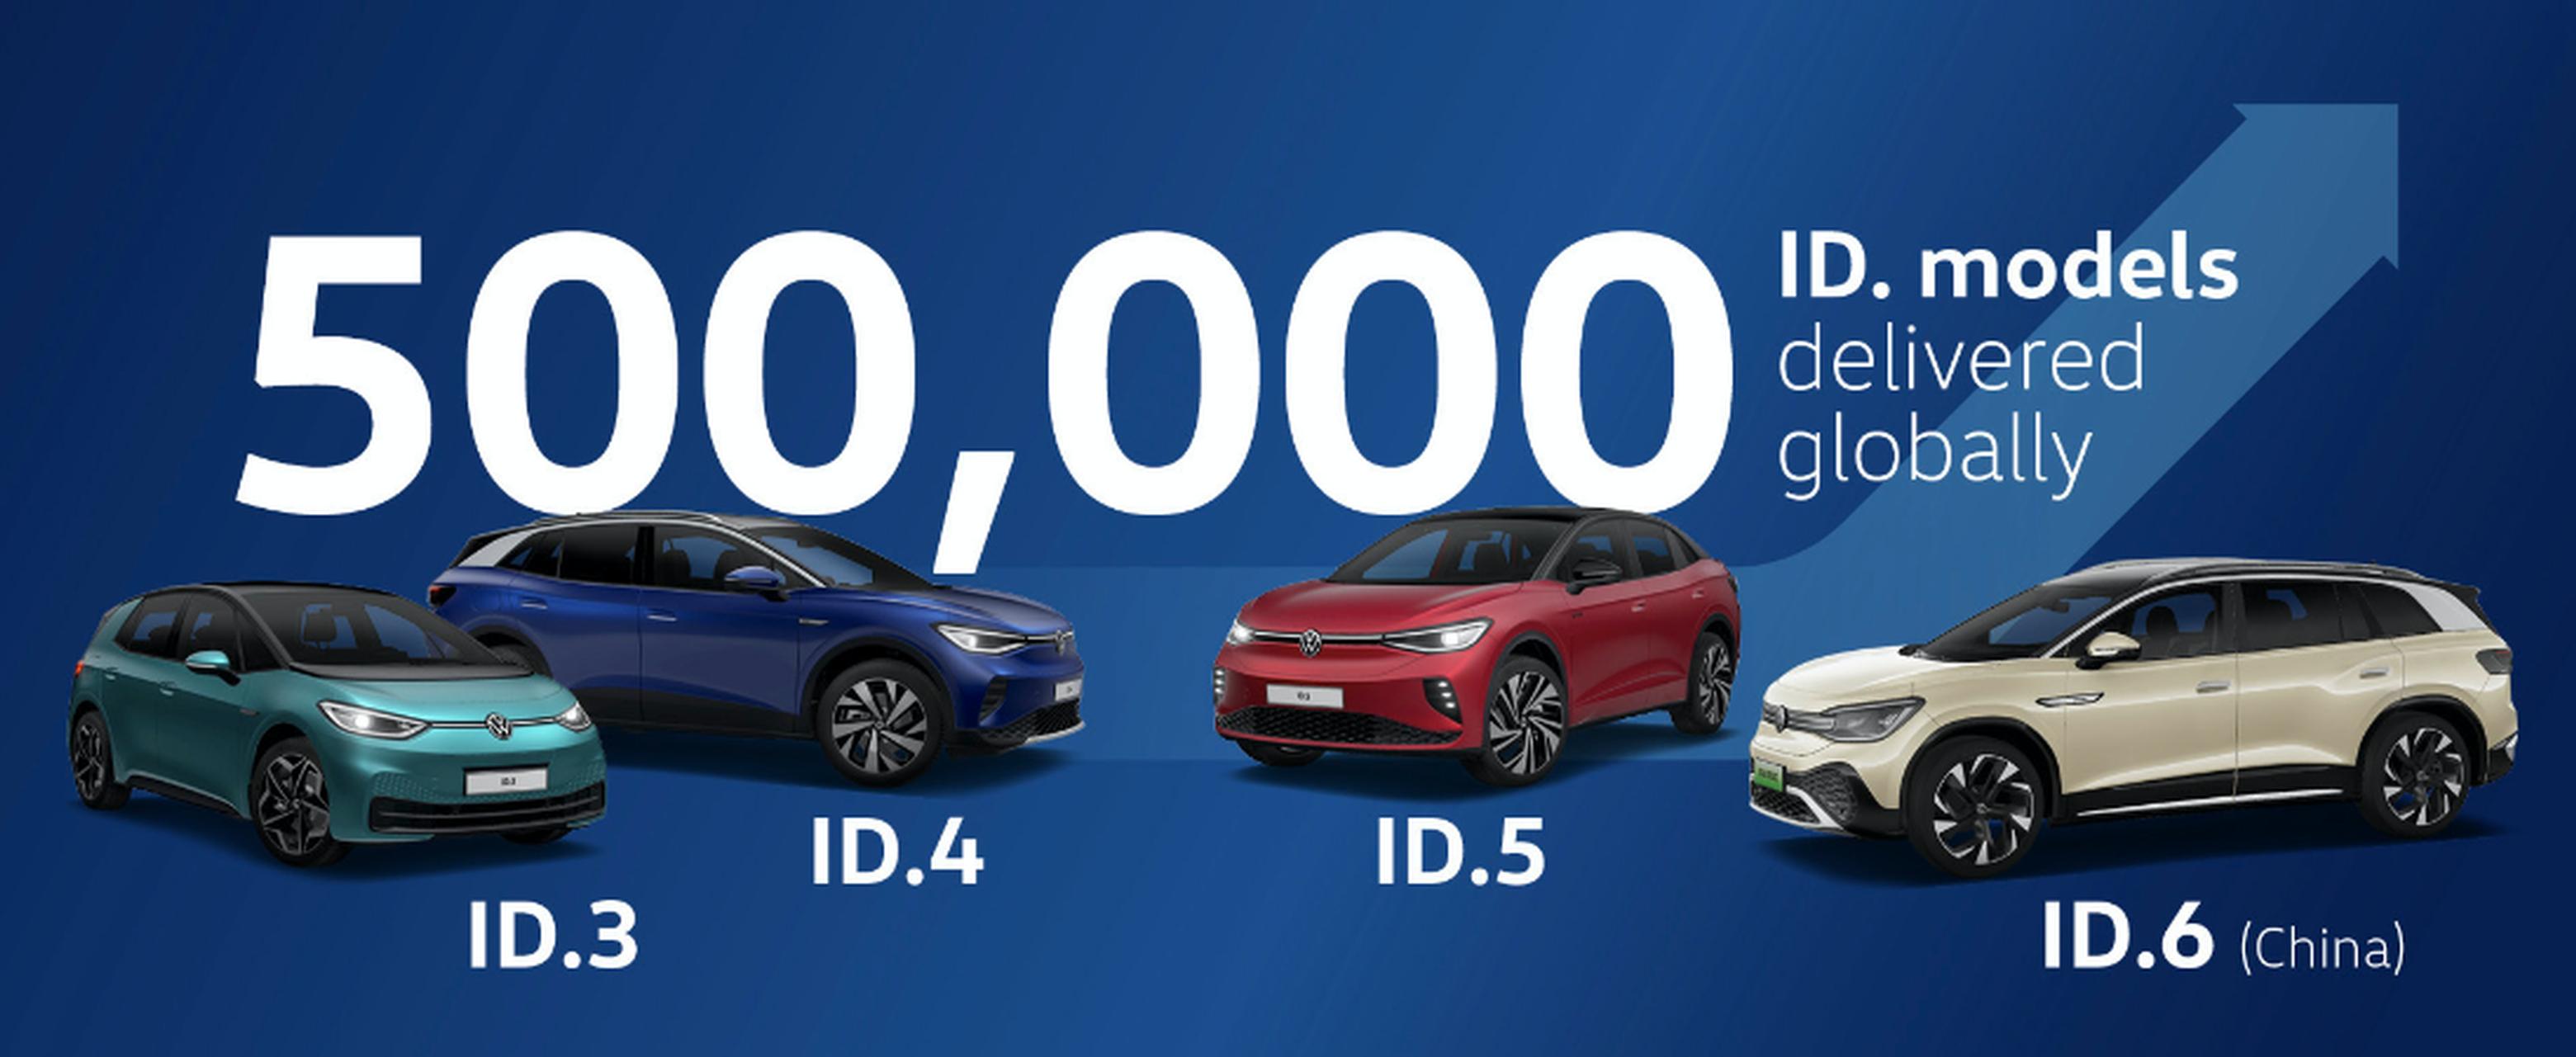 Volkswagen ID. model production passes the half-million mark